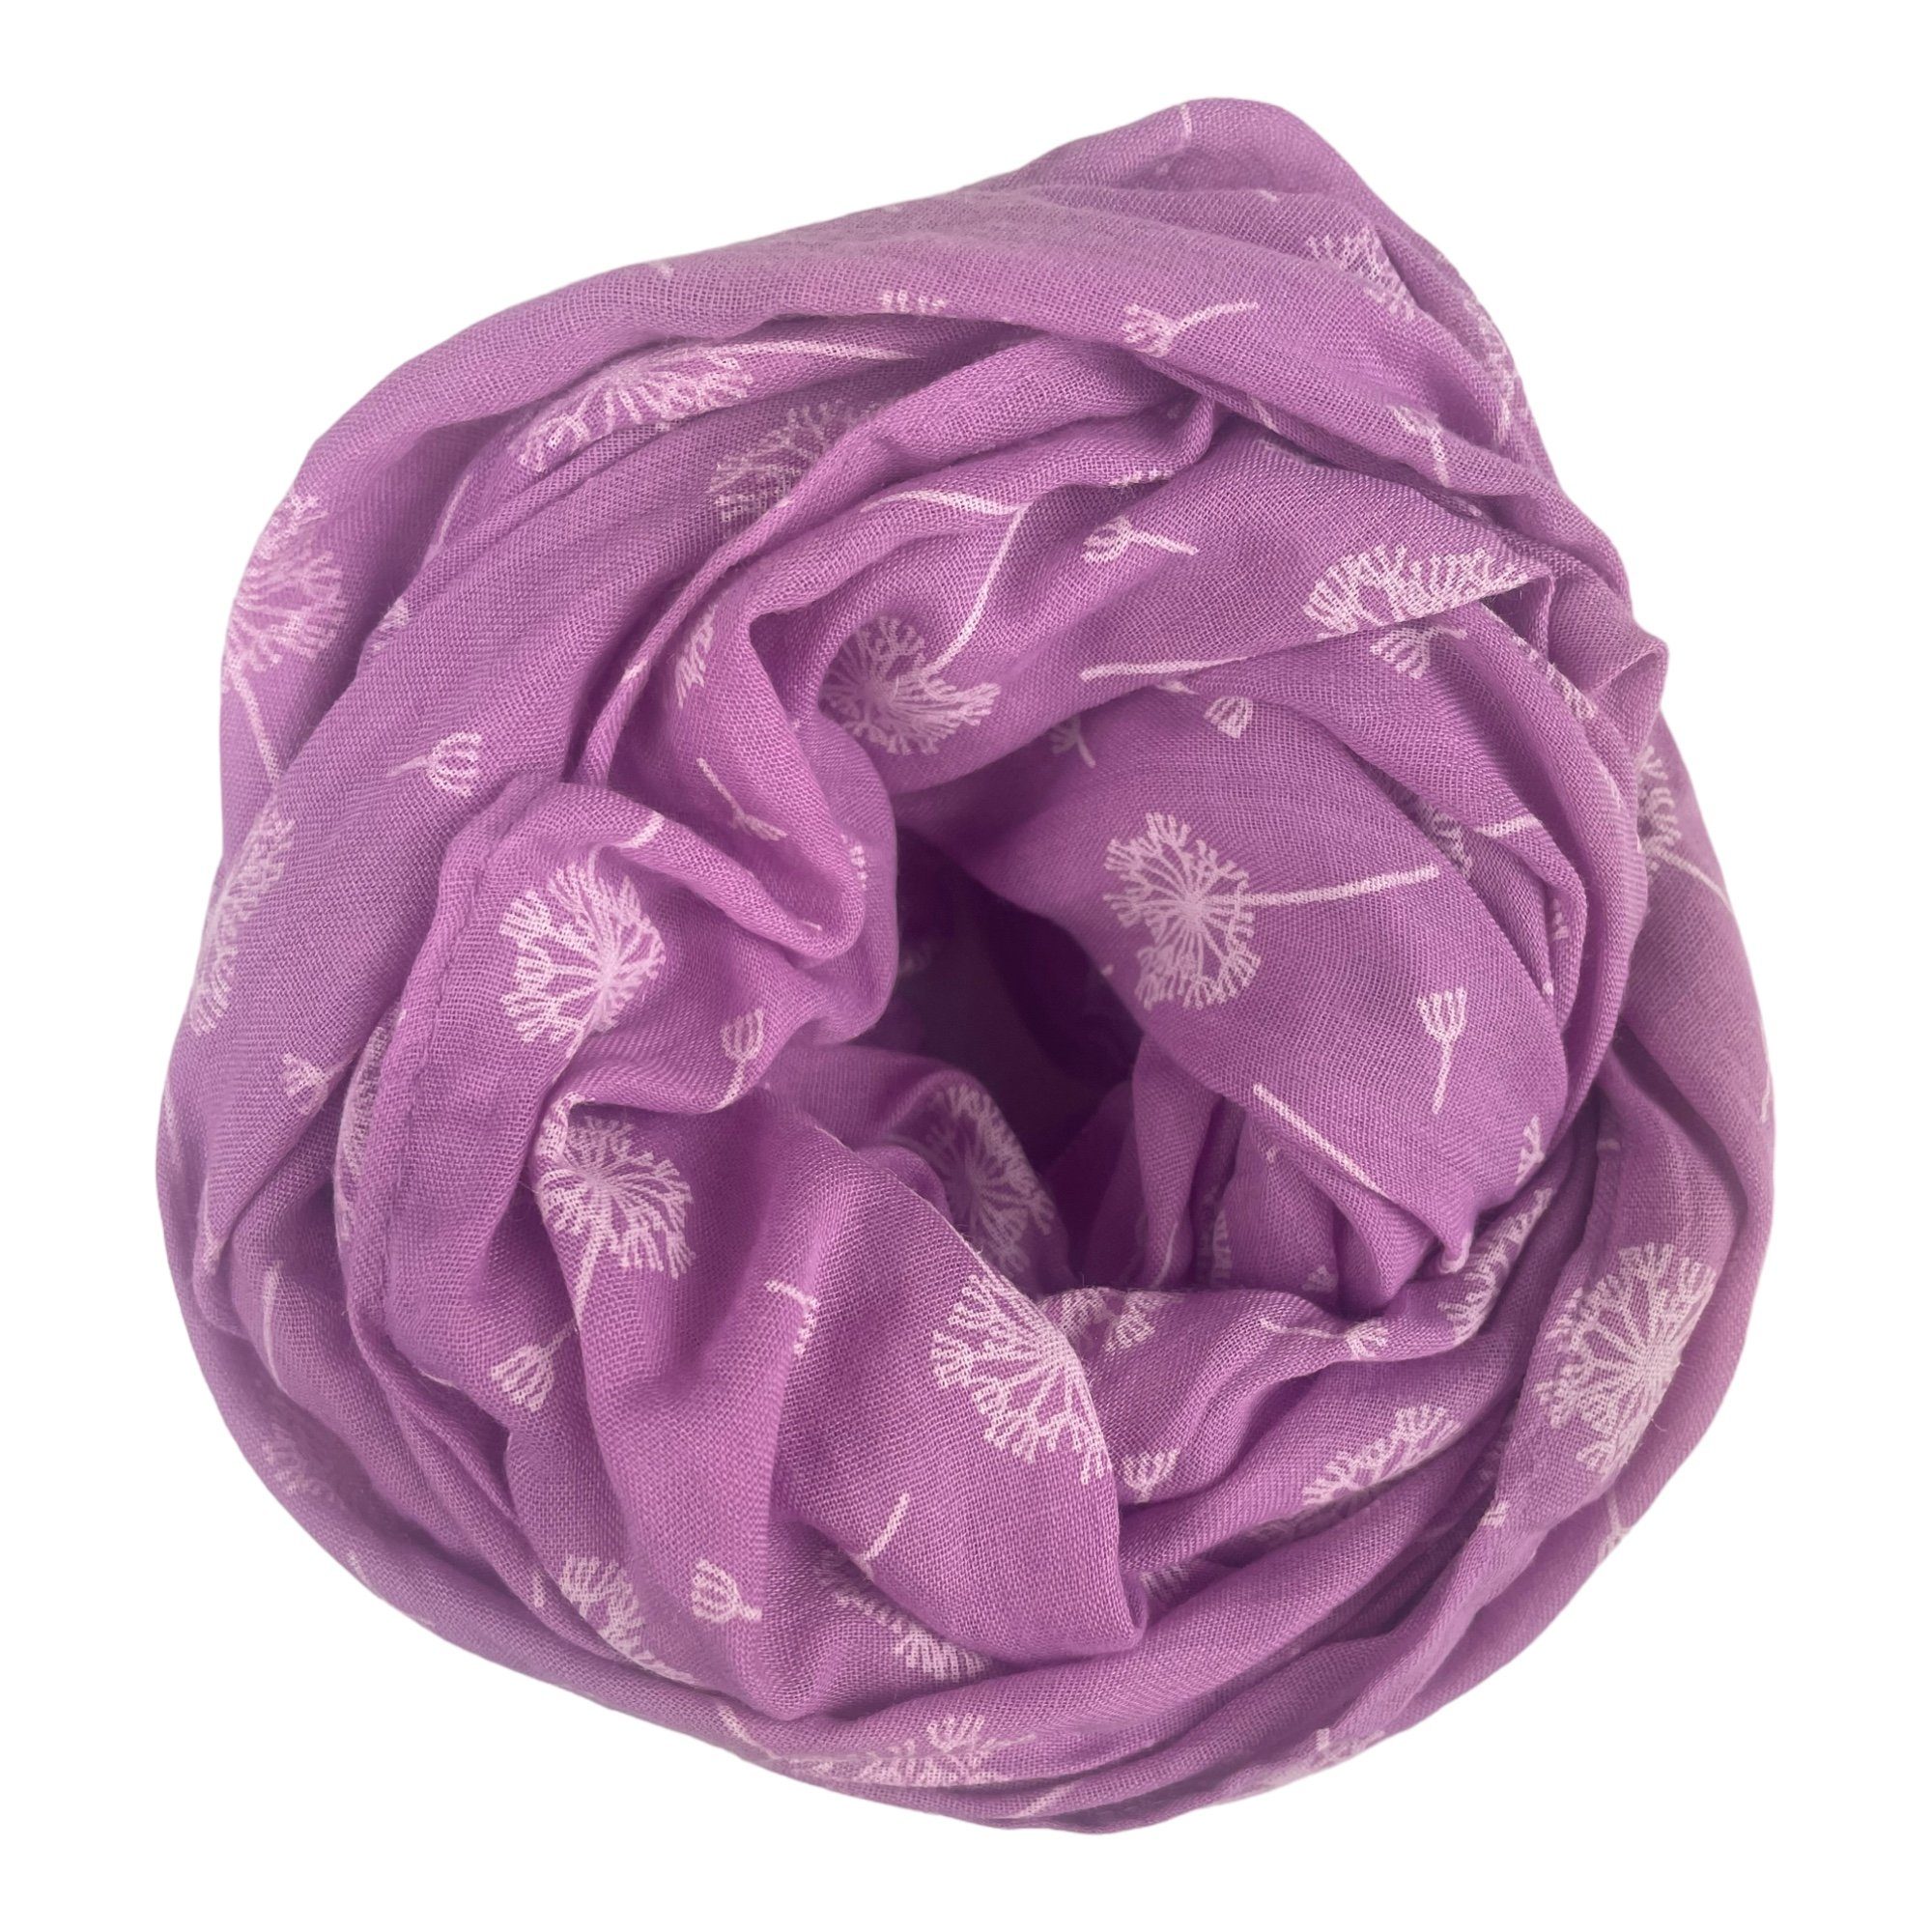 Taschen4life Loop Schal Pusteblumen Schals & Sommer mit Damen Farbwahl, Trend SS-731 Tücher Muster, print, lila